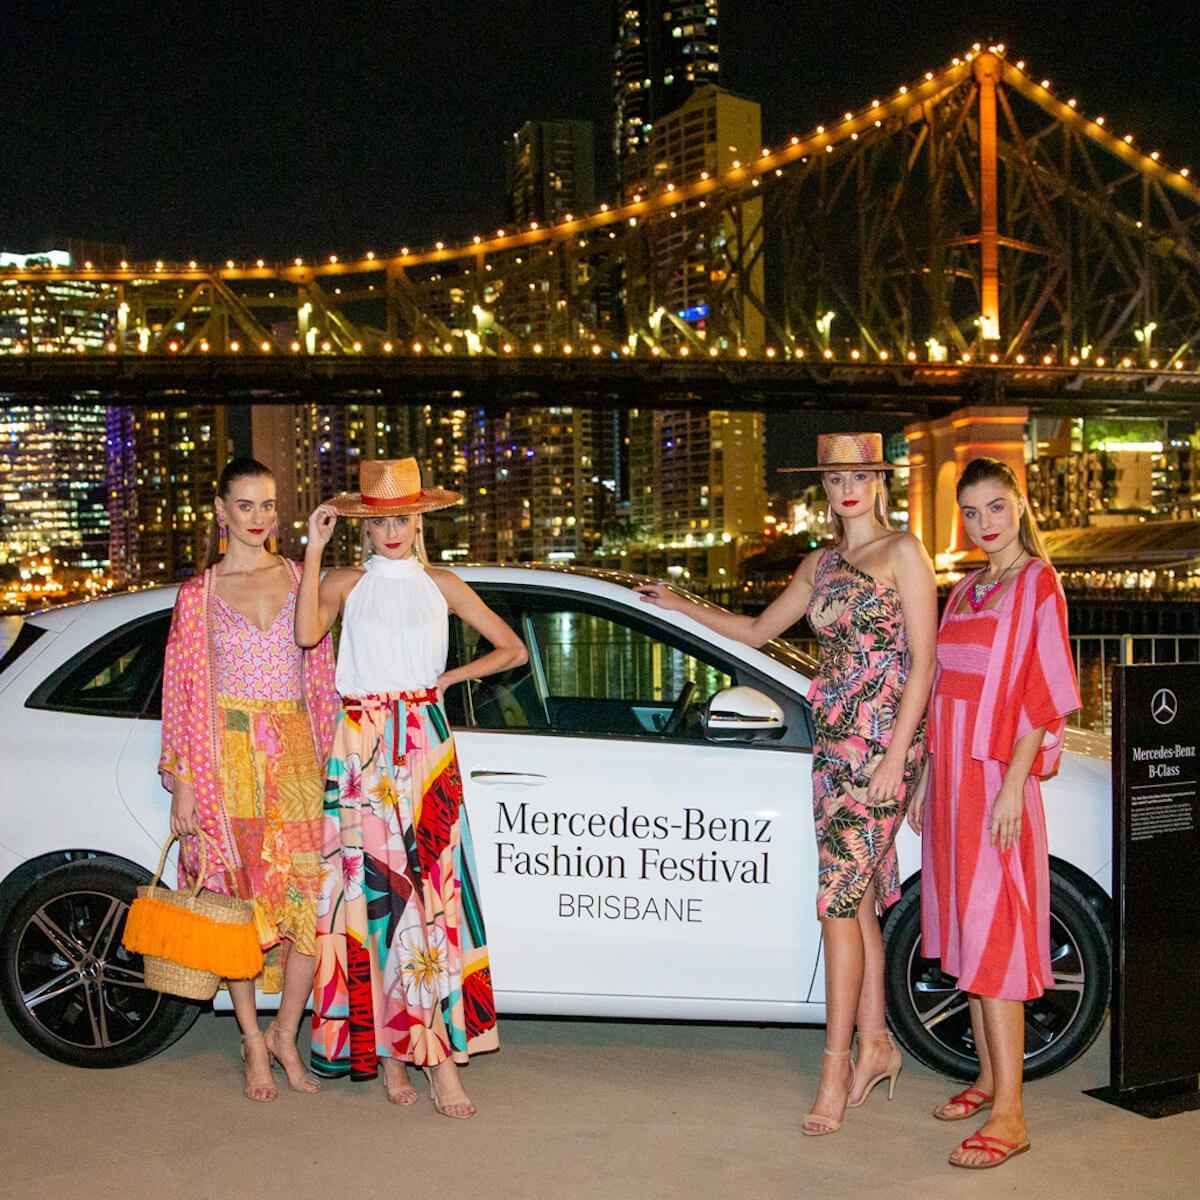 "https://i0.wp.com/melissahoyer.com/wp-content/uploads/2019/09/Mercedes-Benz-Fashion-Festival-Brisbane.jpg?fit=1200%2C1200&#038;ssl=1"